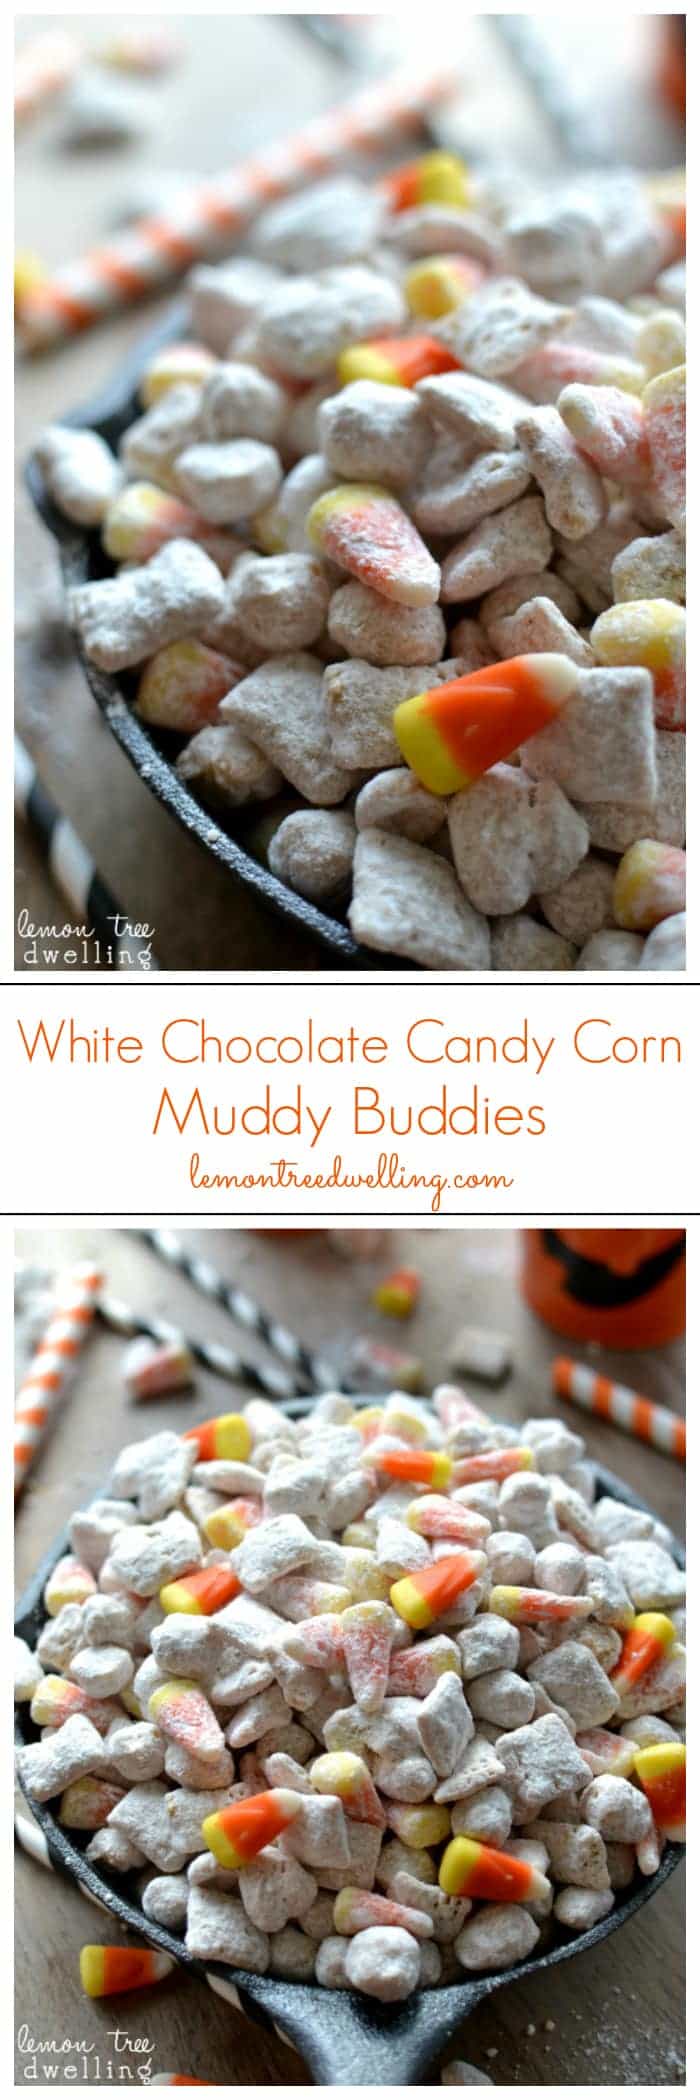 Sweet & Salty White Chocolate Candy Corn Muddy Buddies!